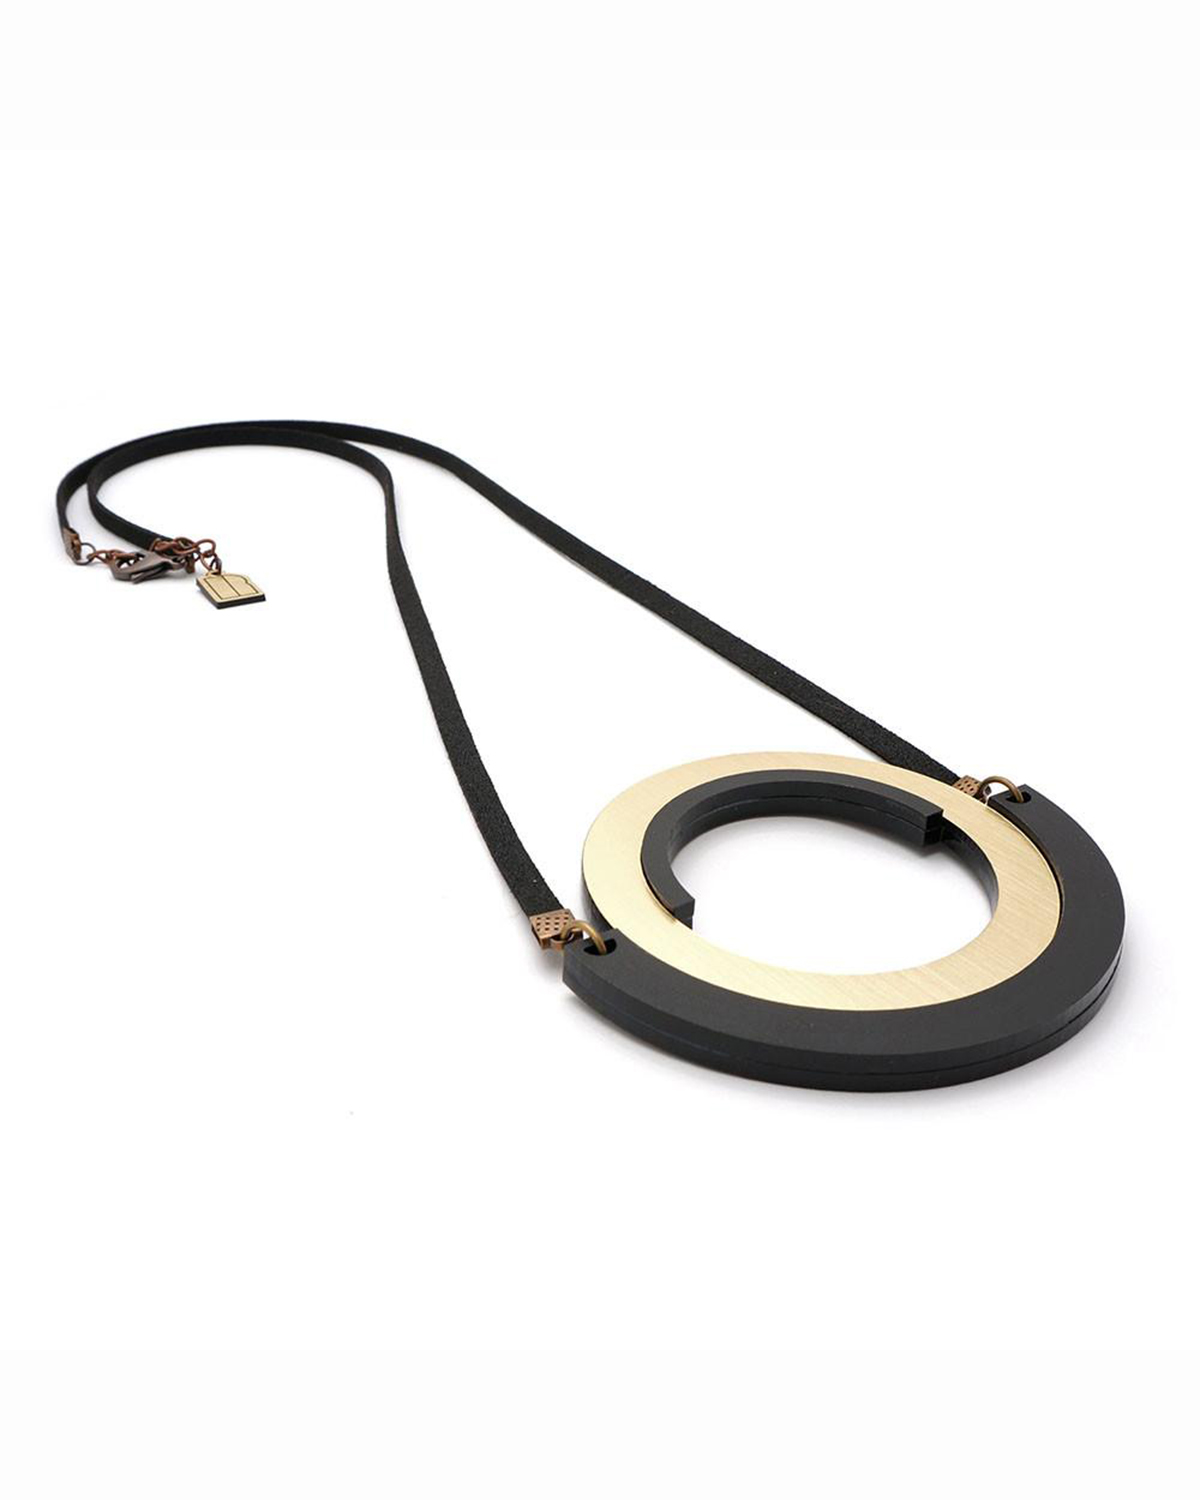 Fullmoon necklace | Lasercut jewelry | Rename | Made in Belgrade